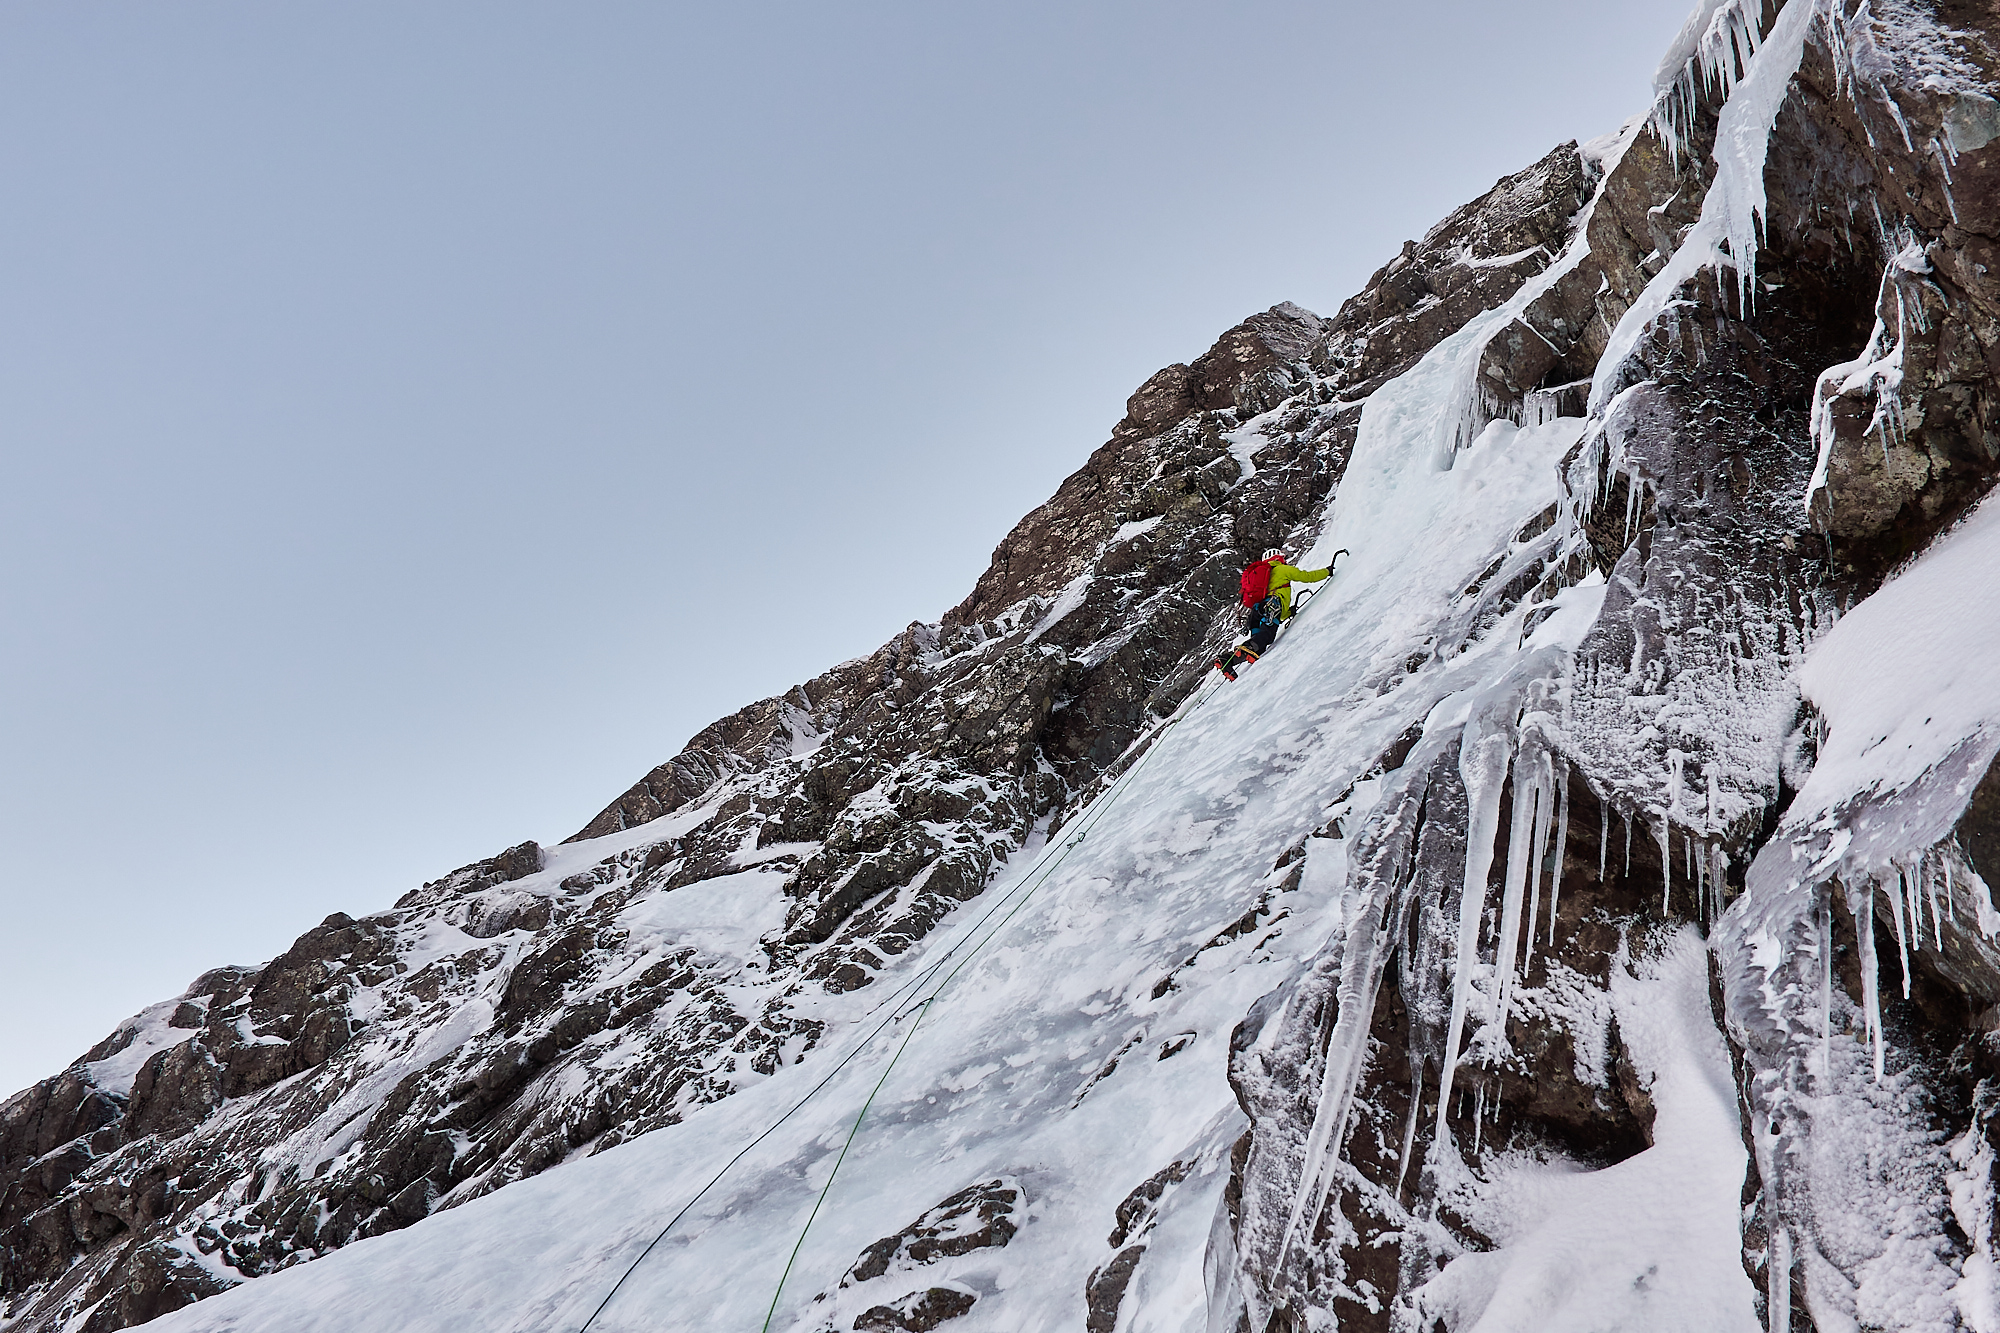 scottish winter ice climbing hadrians wall direct ben nevis